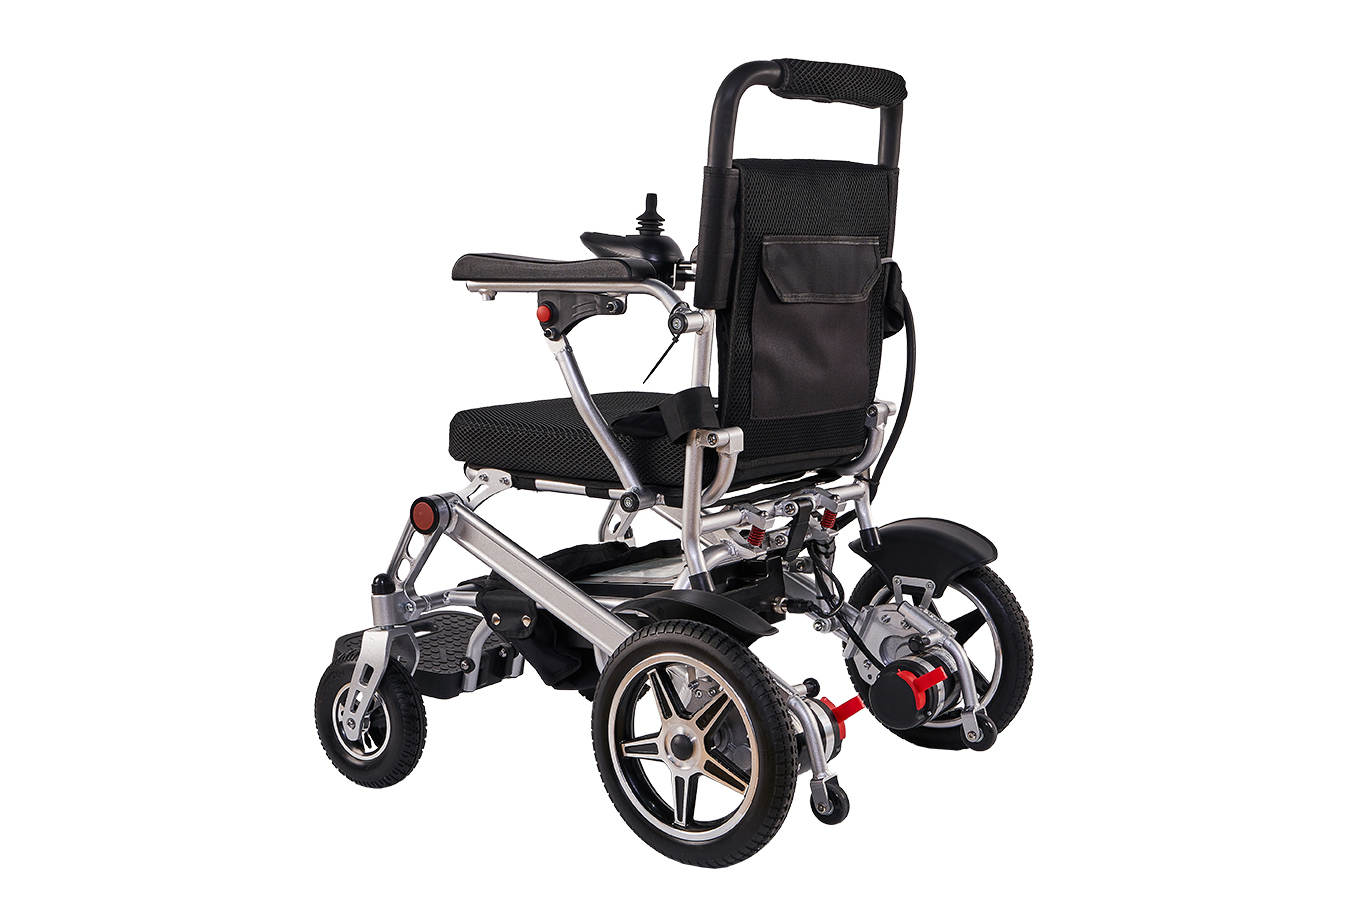 Revolutionary Commoditas: Leve Foldable Electric Wheelchair- development historia et futura inclinatio lucis portatilis electrica wheelchair